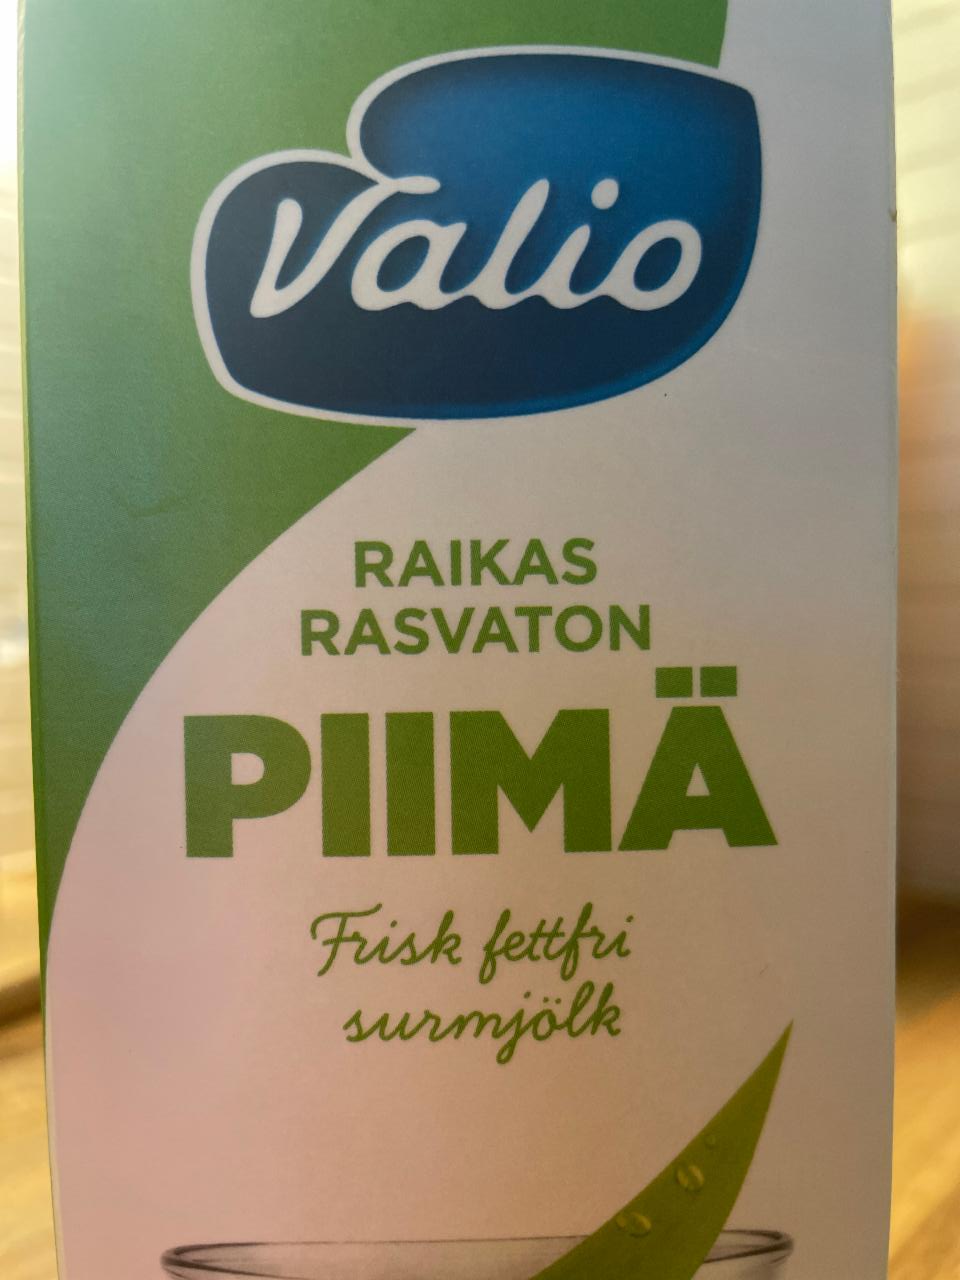 Фото - питьевой йогурт Piimä Valio